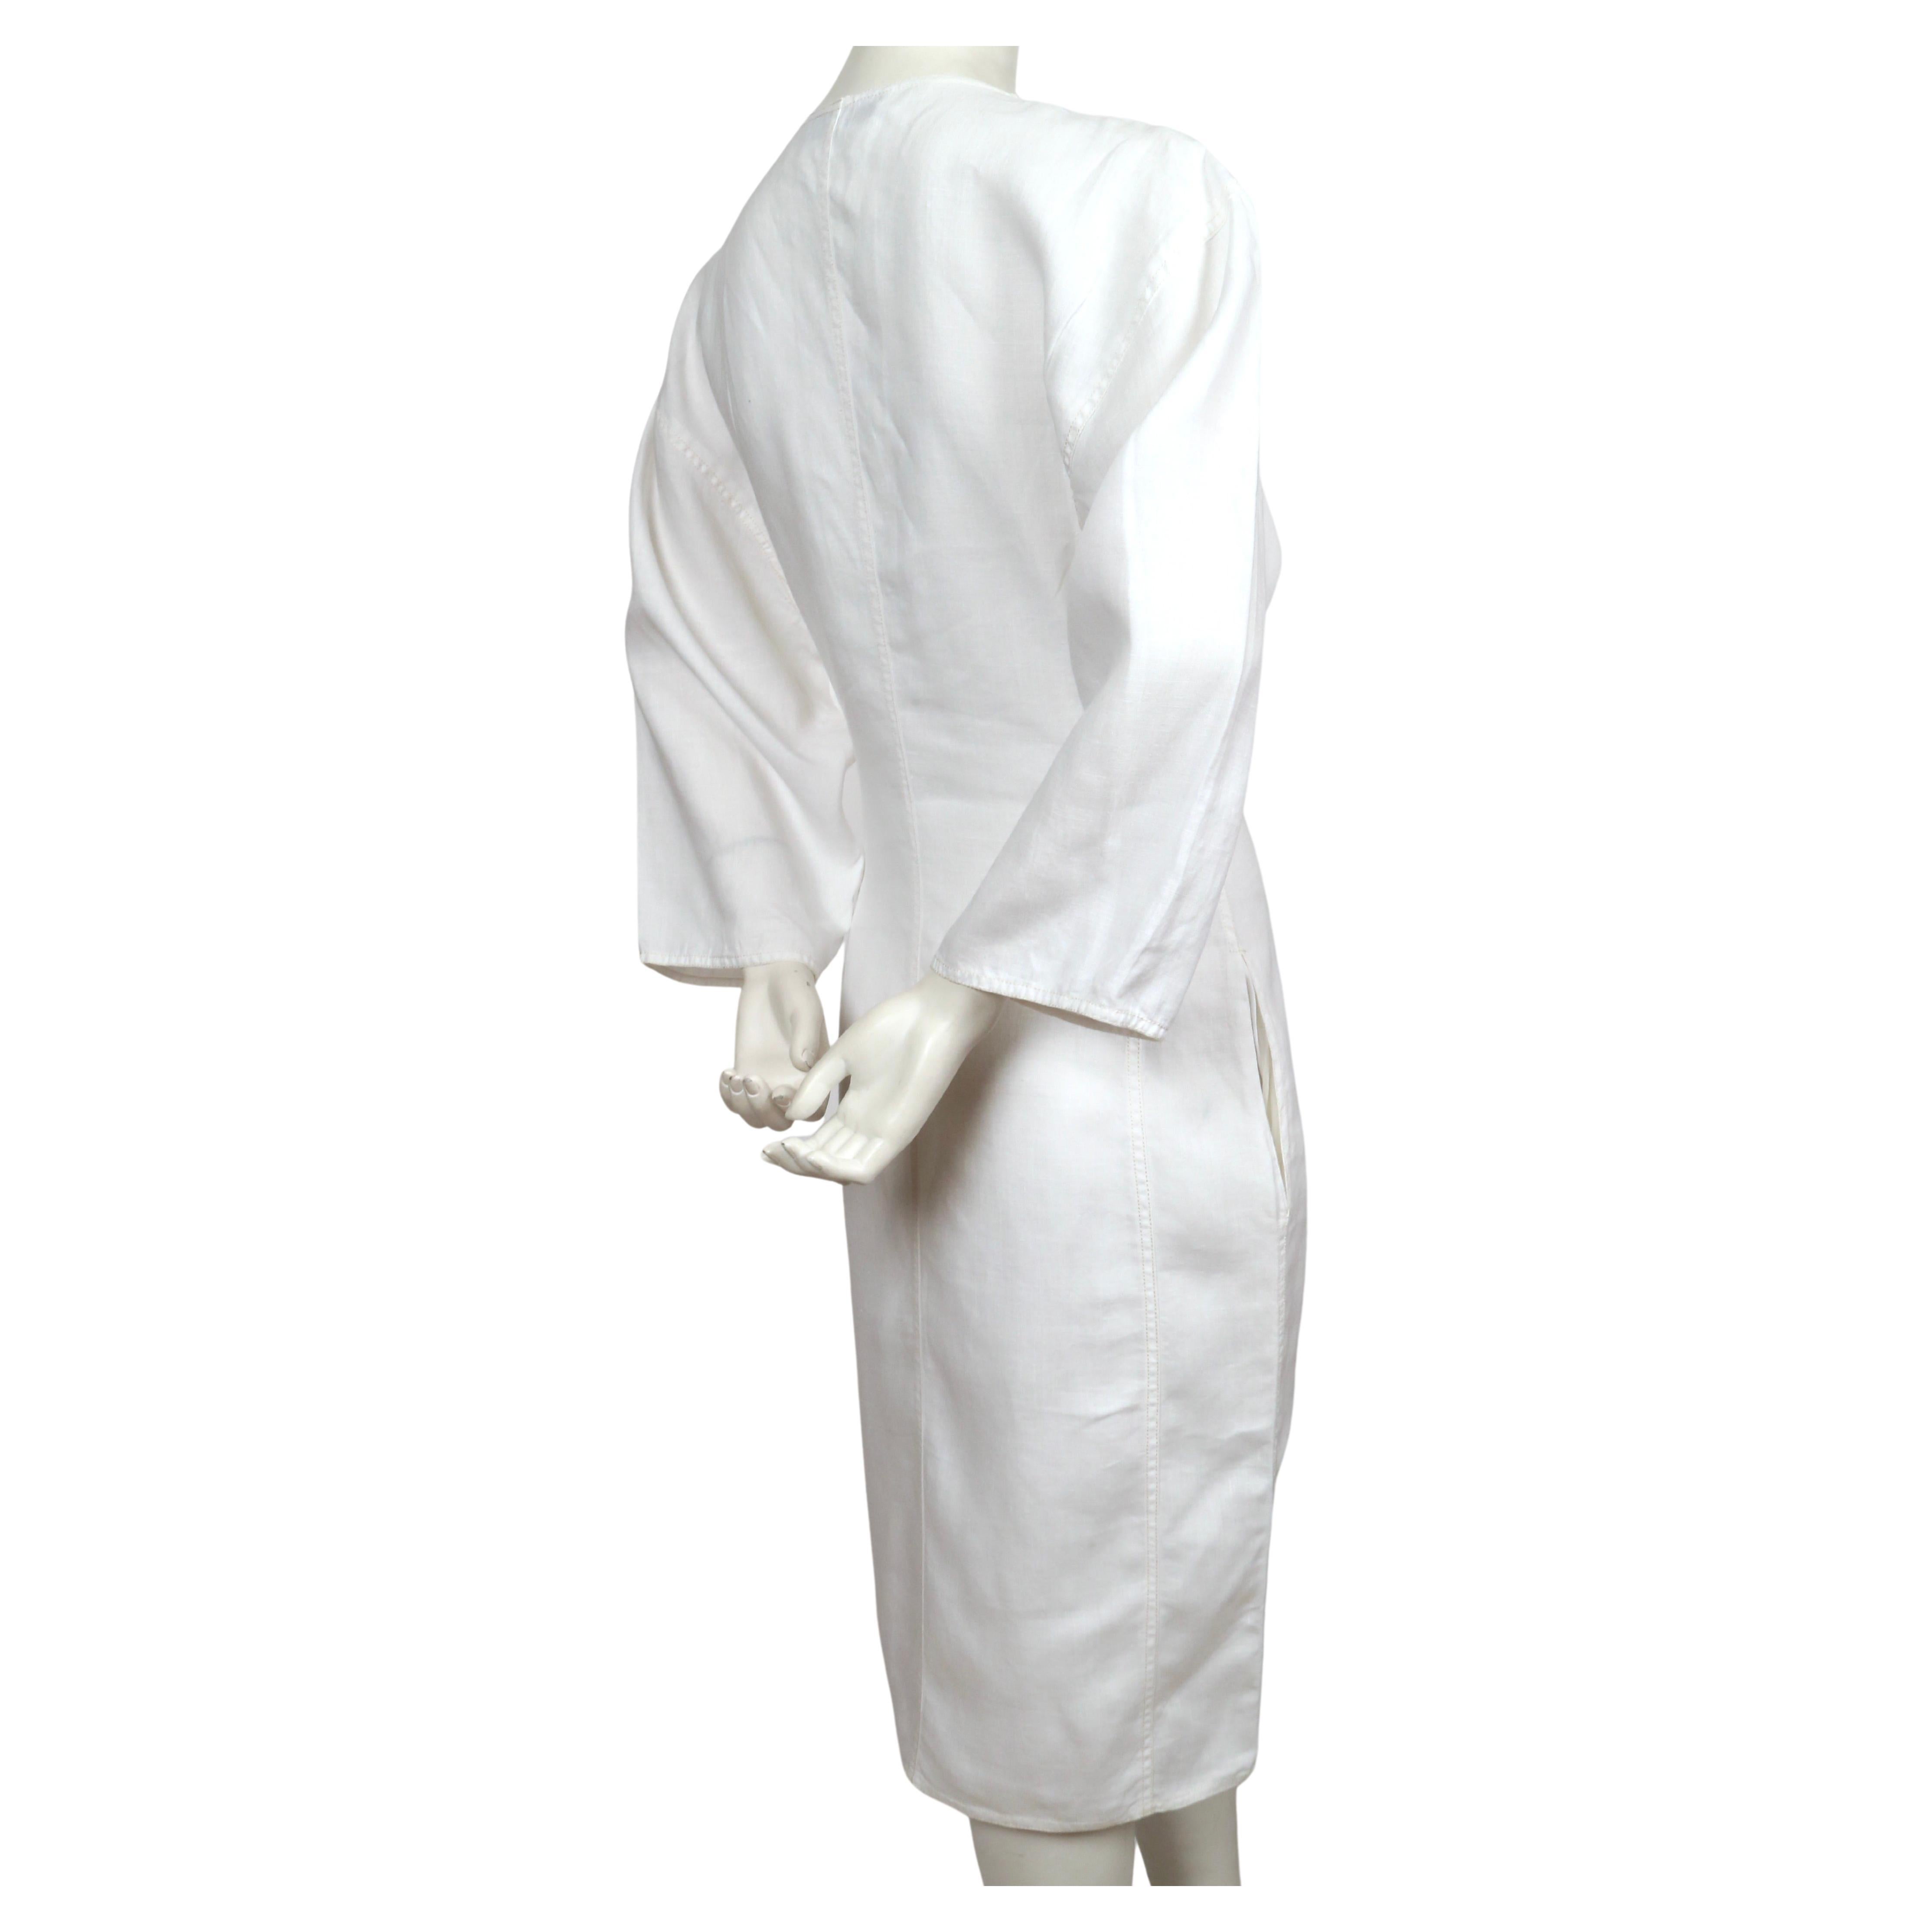 Women's 1980's ANNE MARIE BERETTA white linen dress For Sale